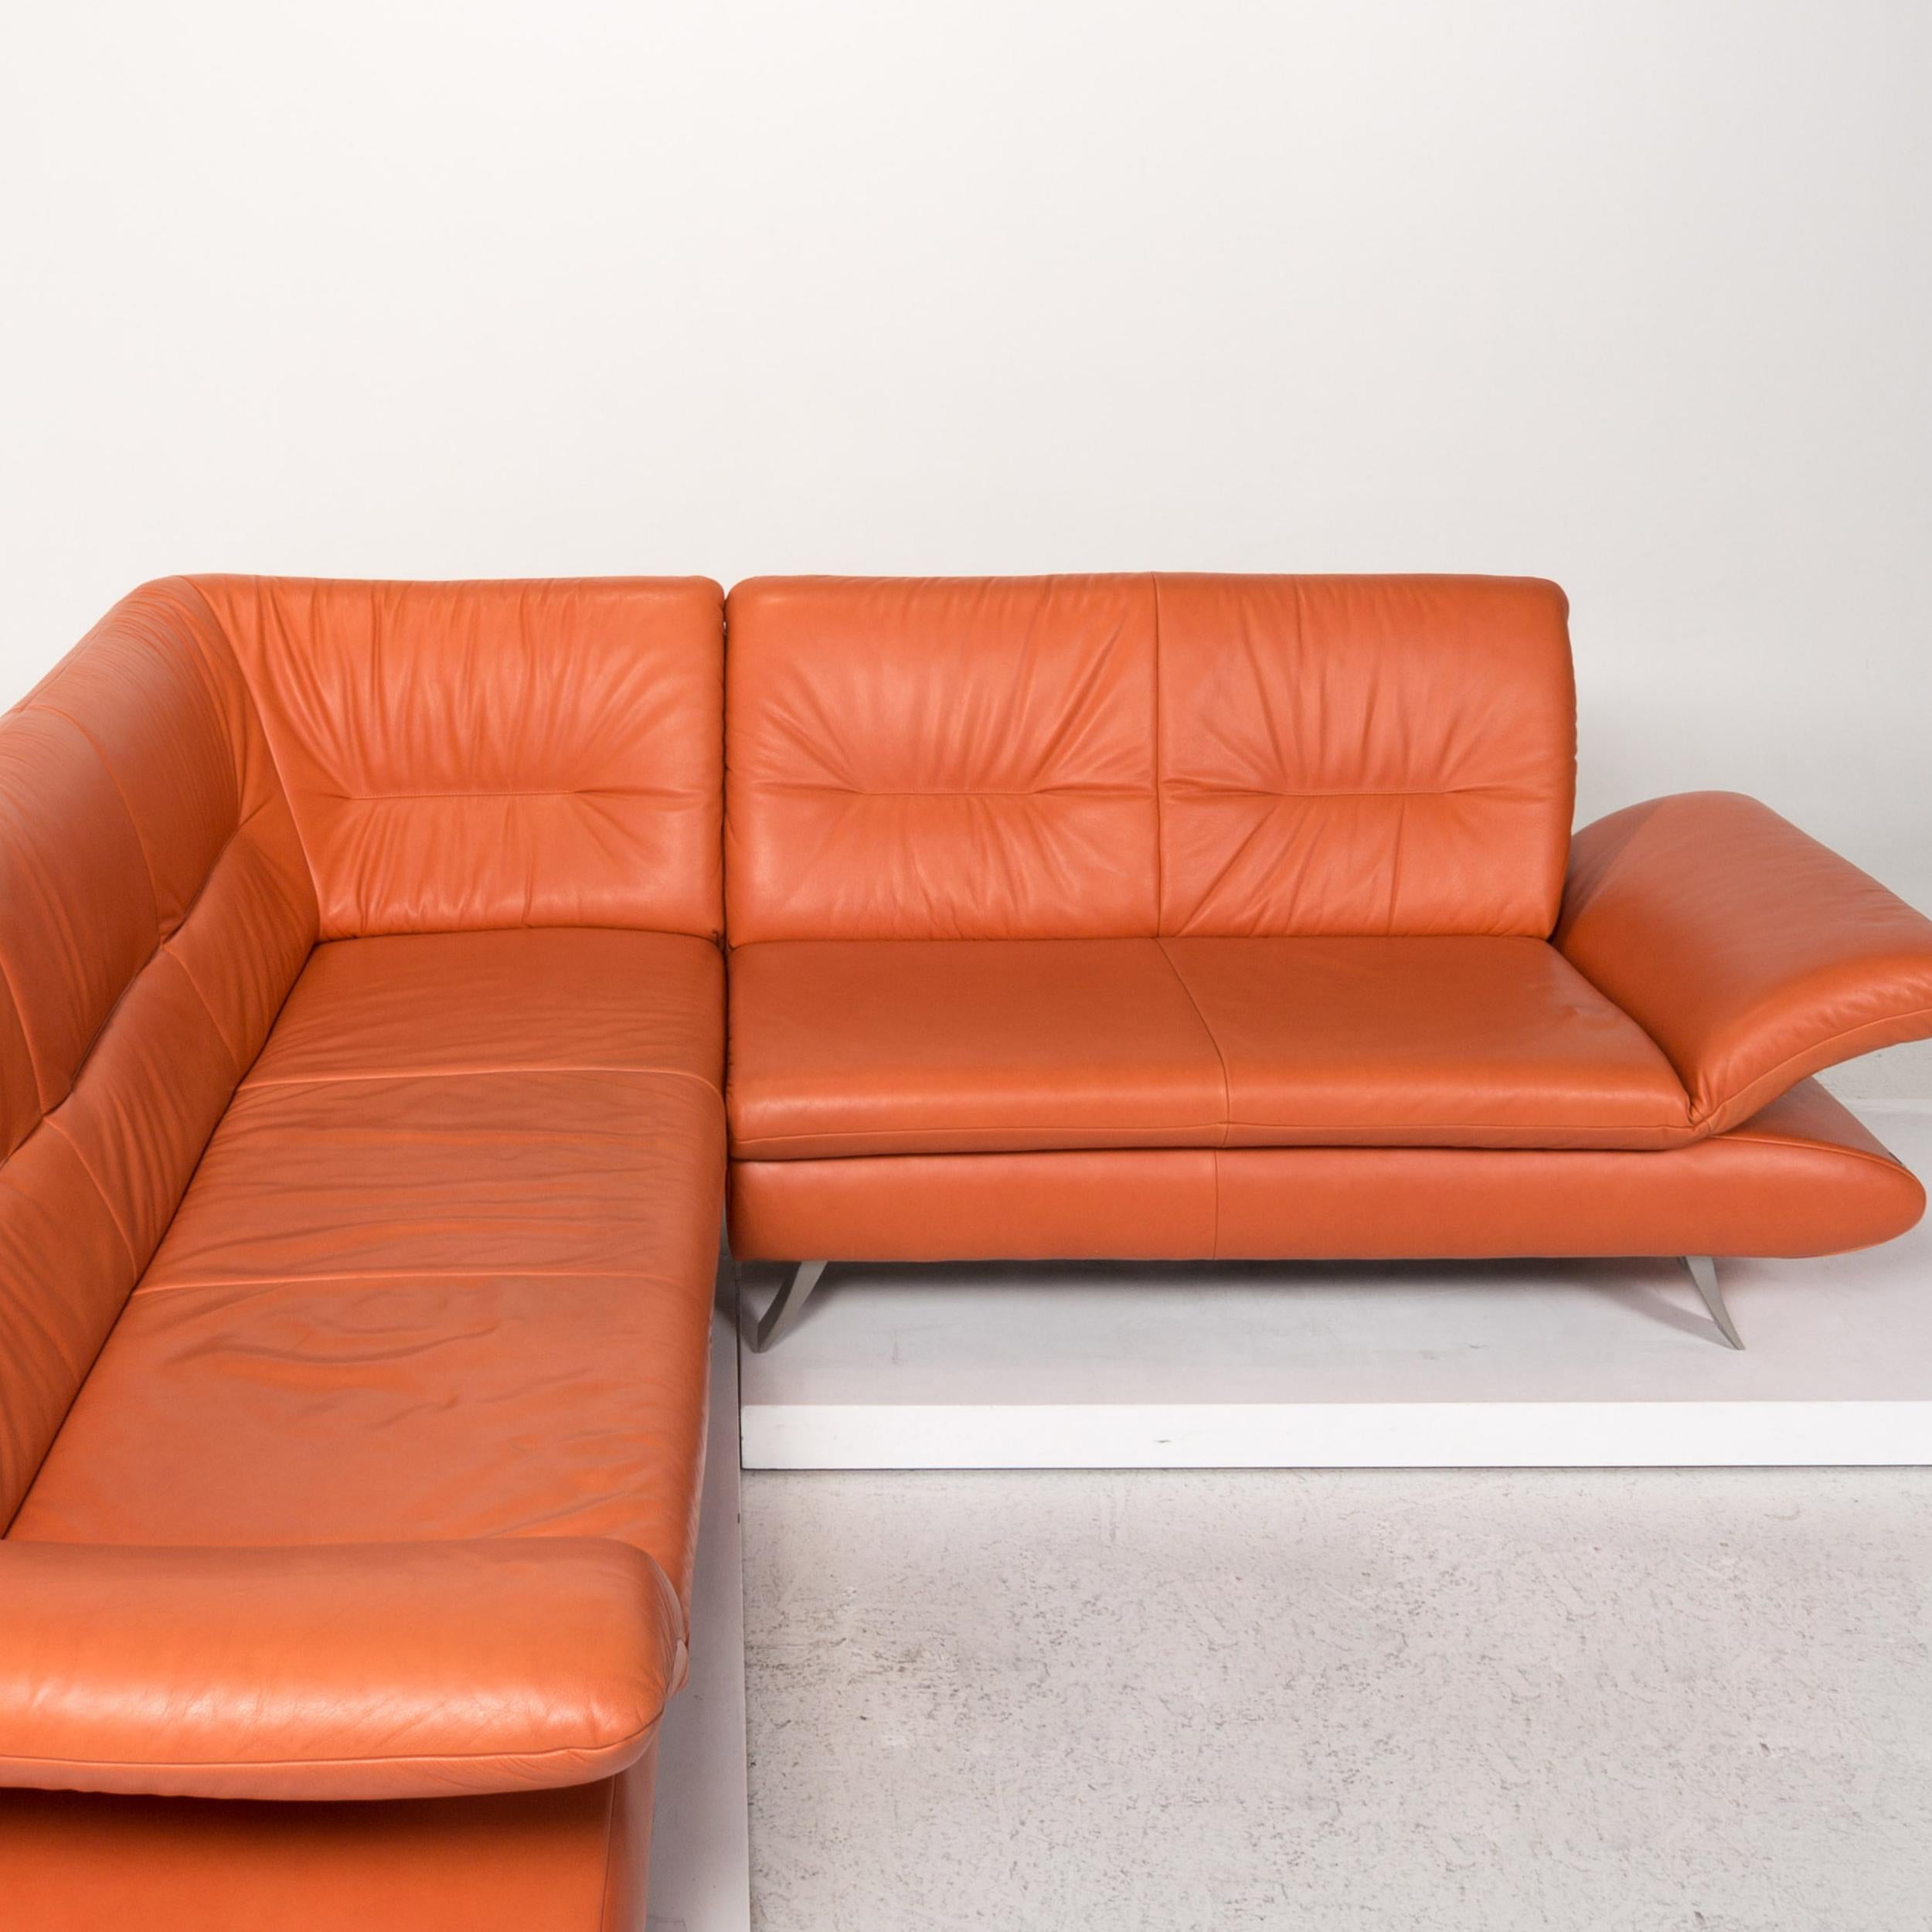 Koinor Rossini Leather Corner Sofa Terracotta Orange Sofa Function Couch 2